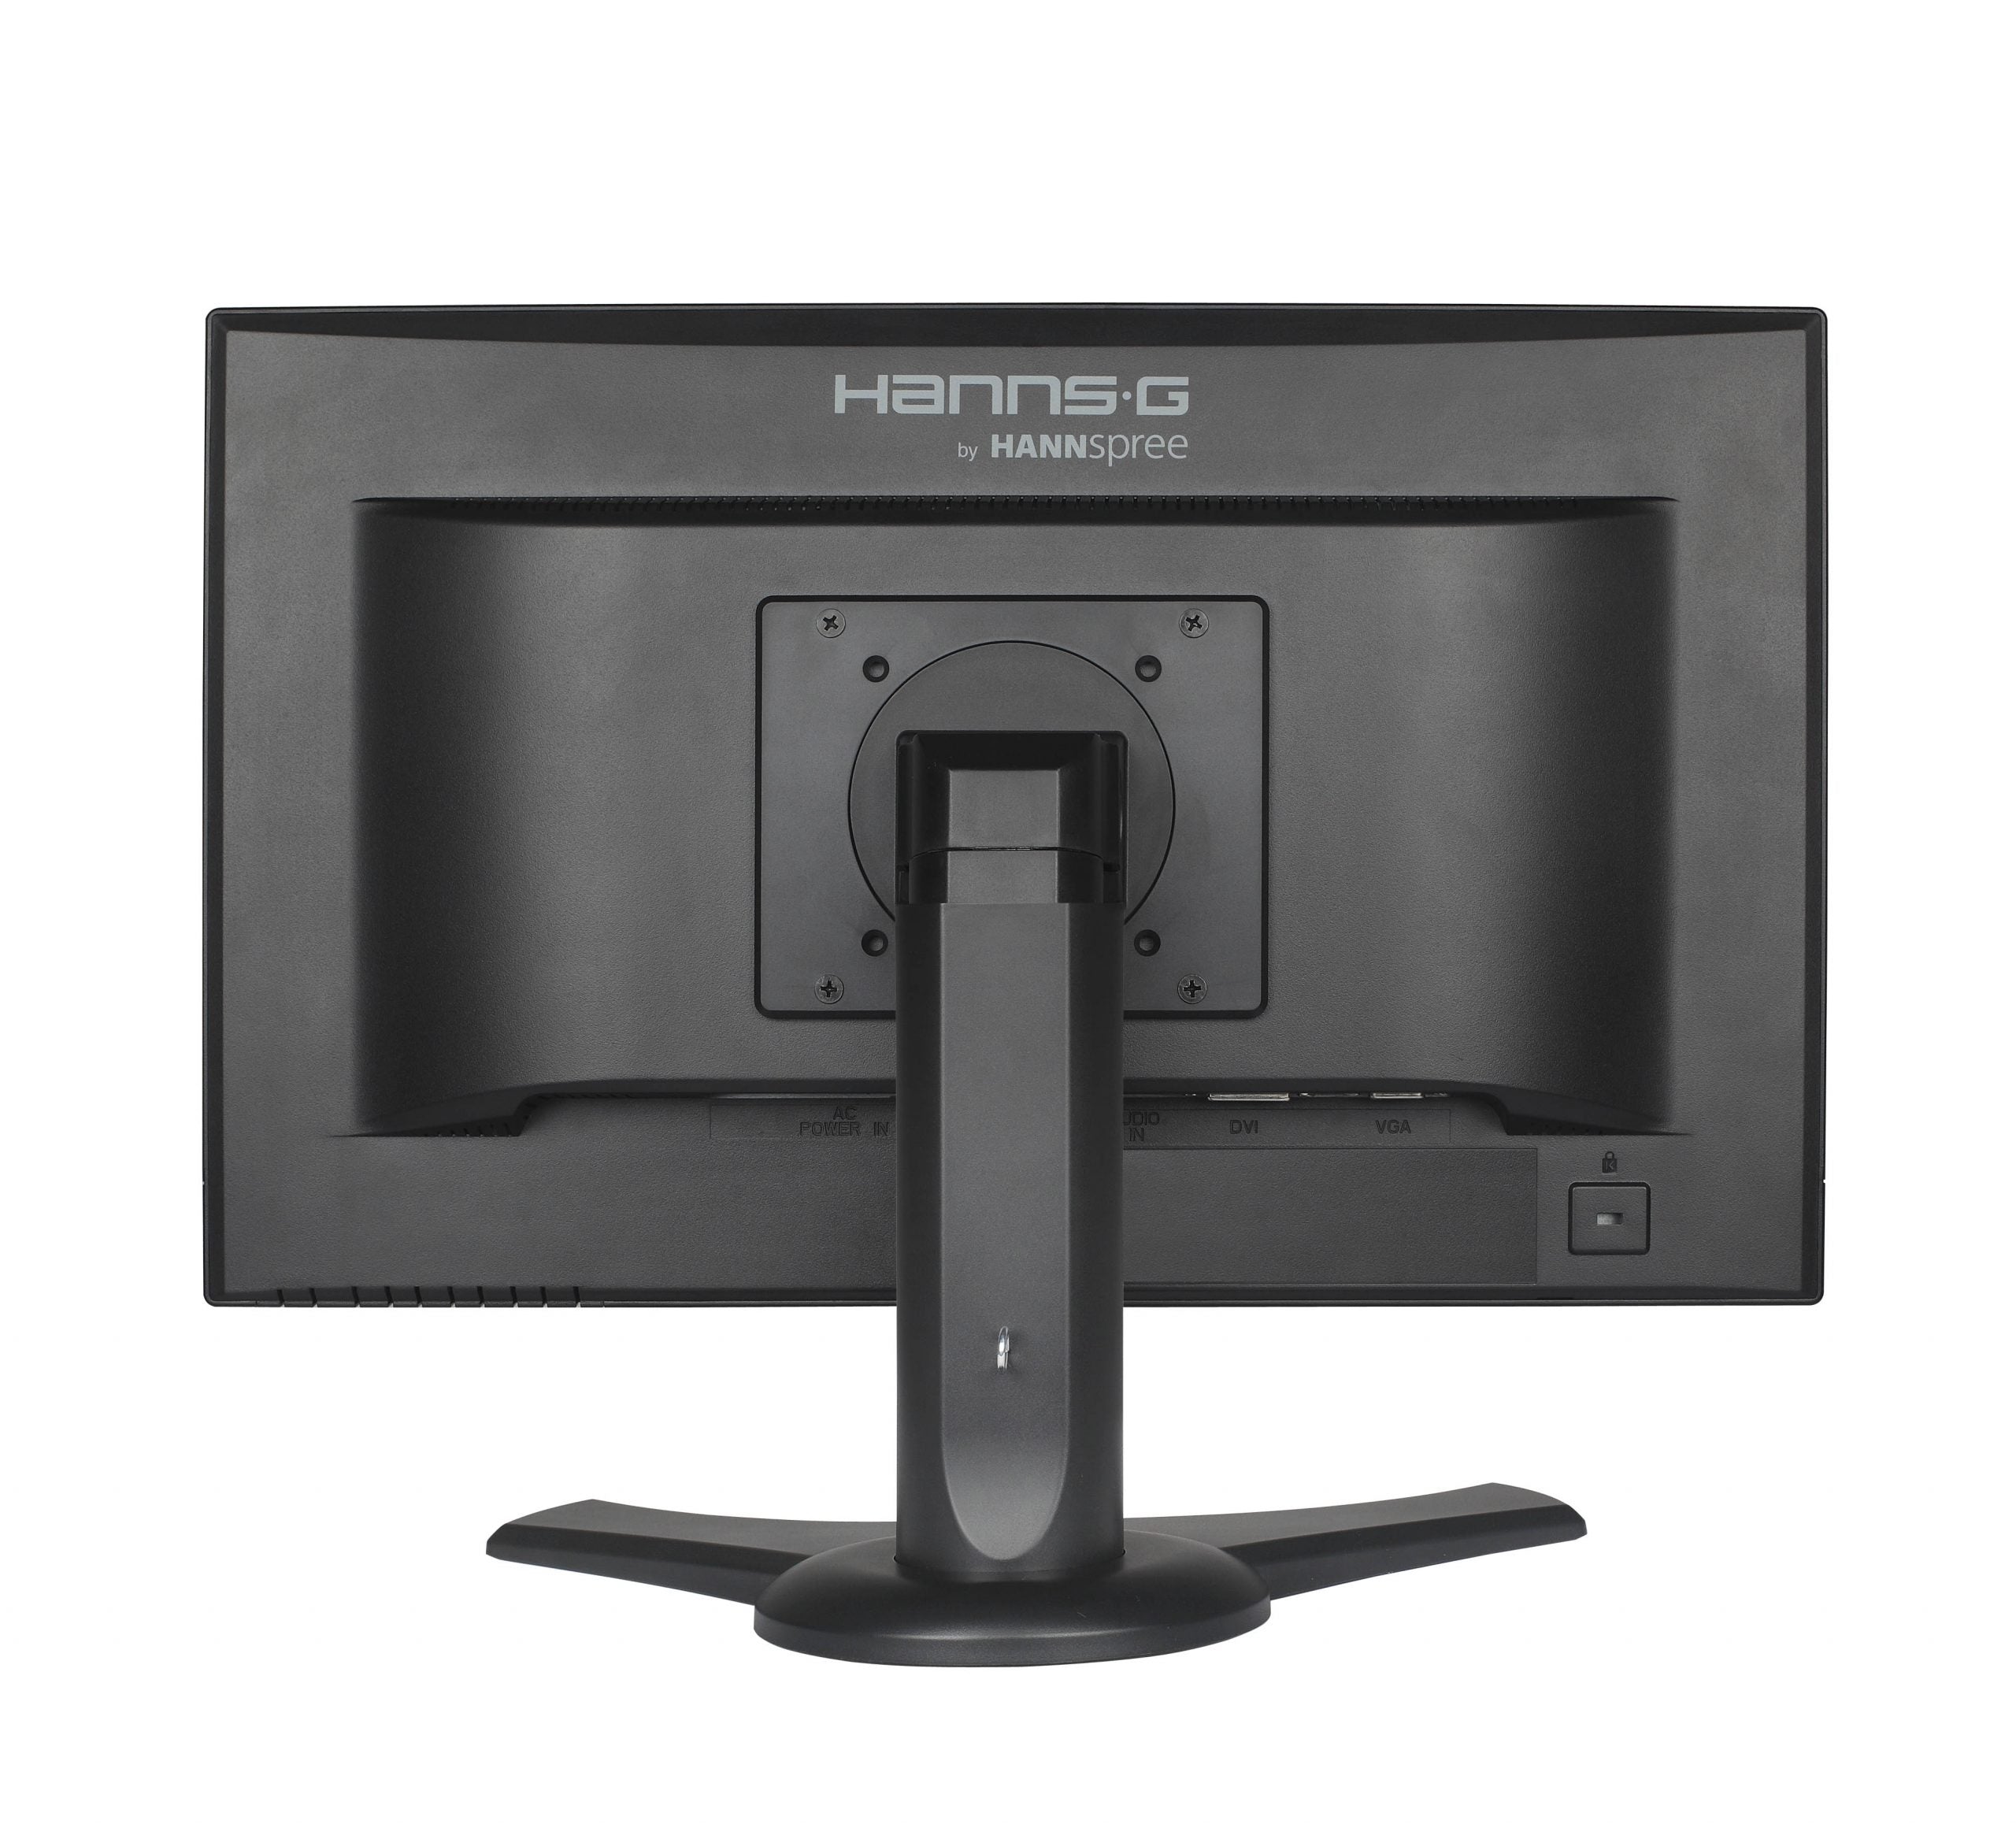 Hannspree Hanns.G HP 205 Monitor LCD TFT LED 20